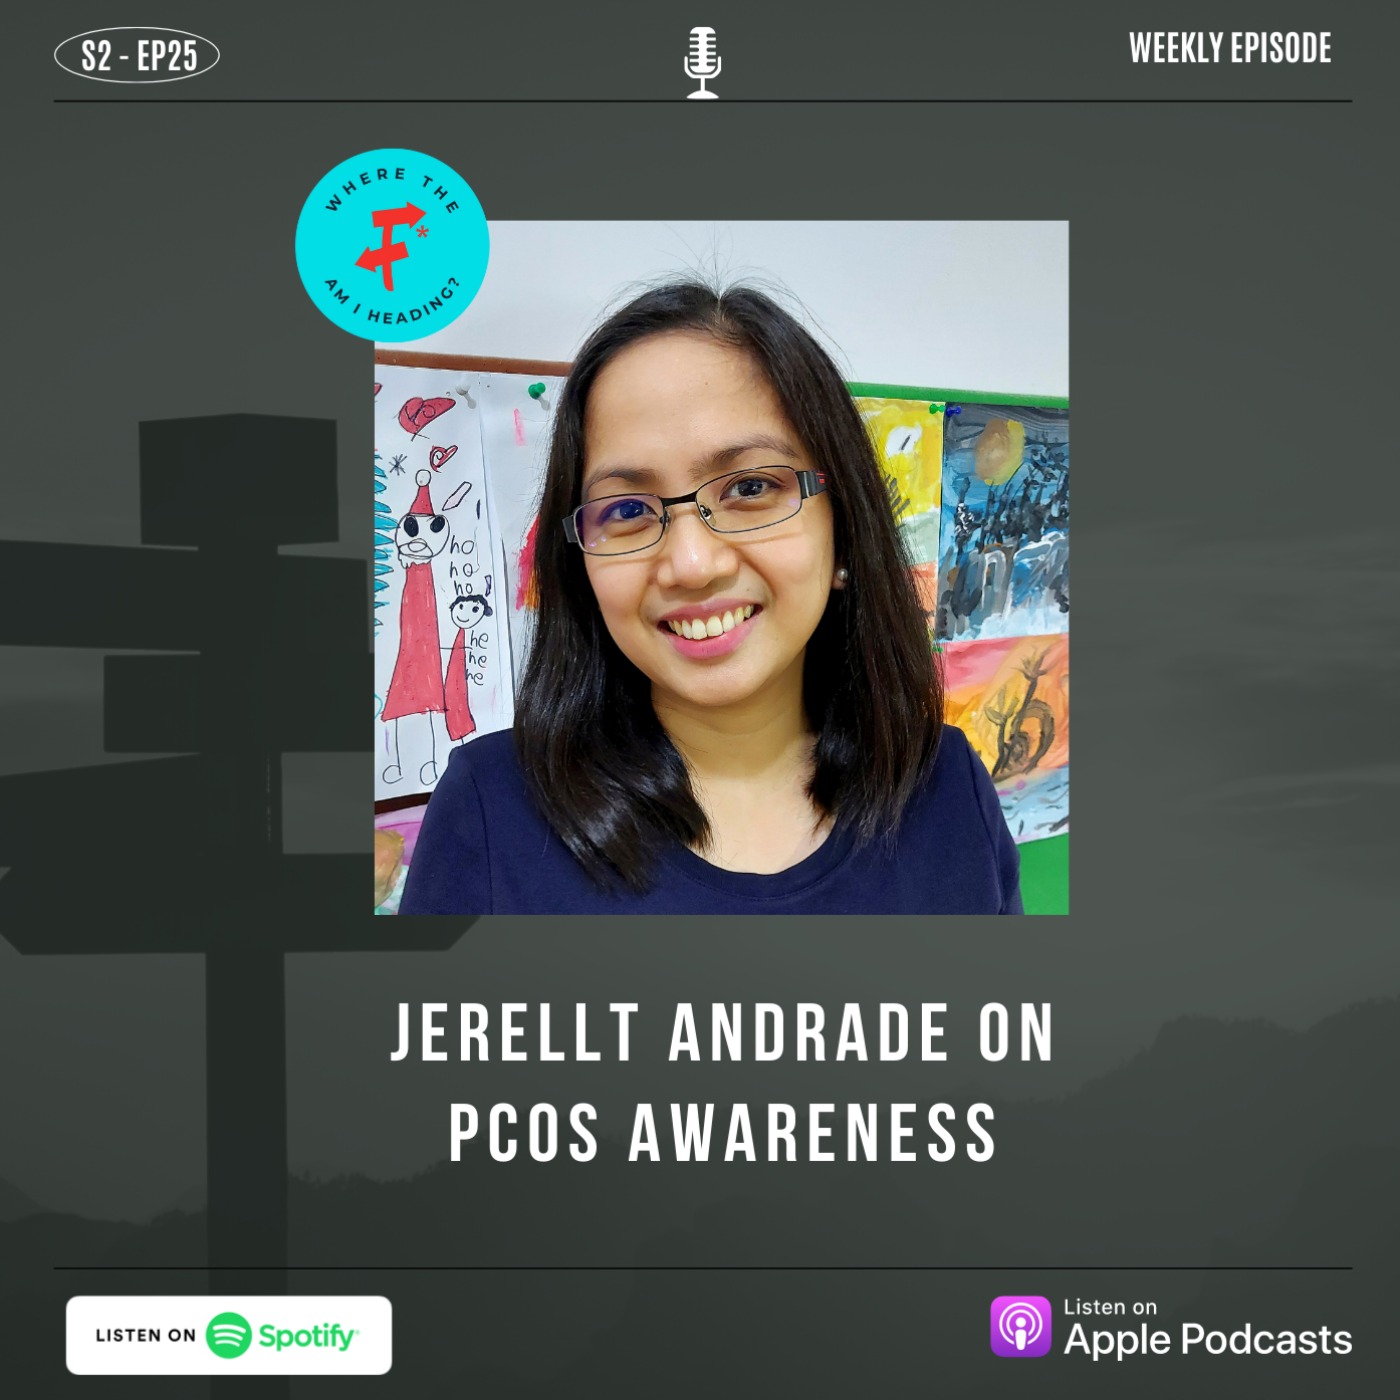 Jerellt Andrade On PCOS Awareness